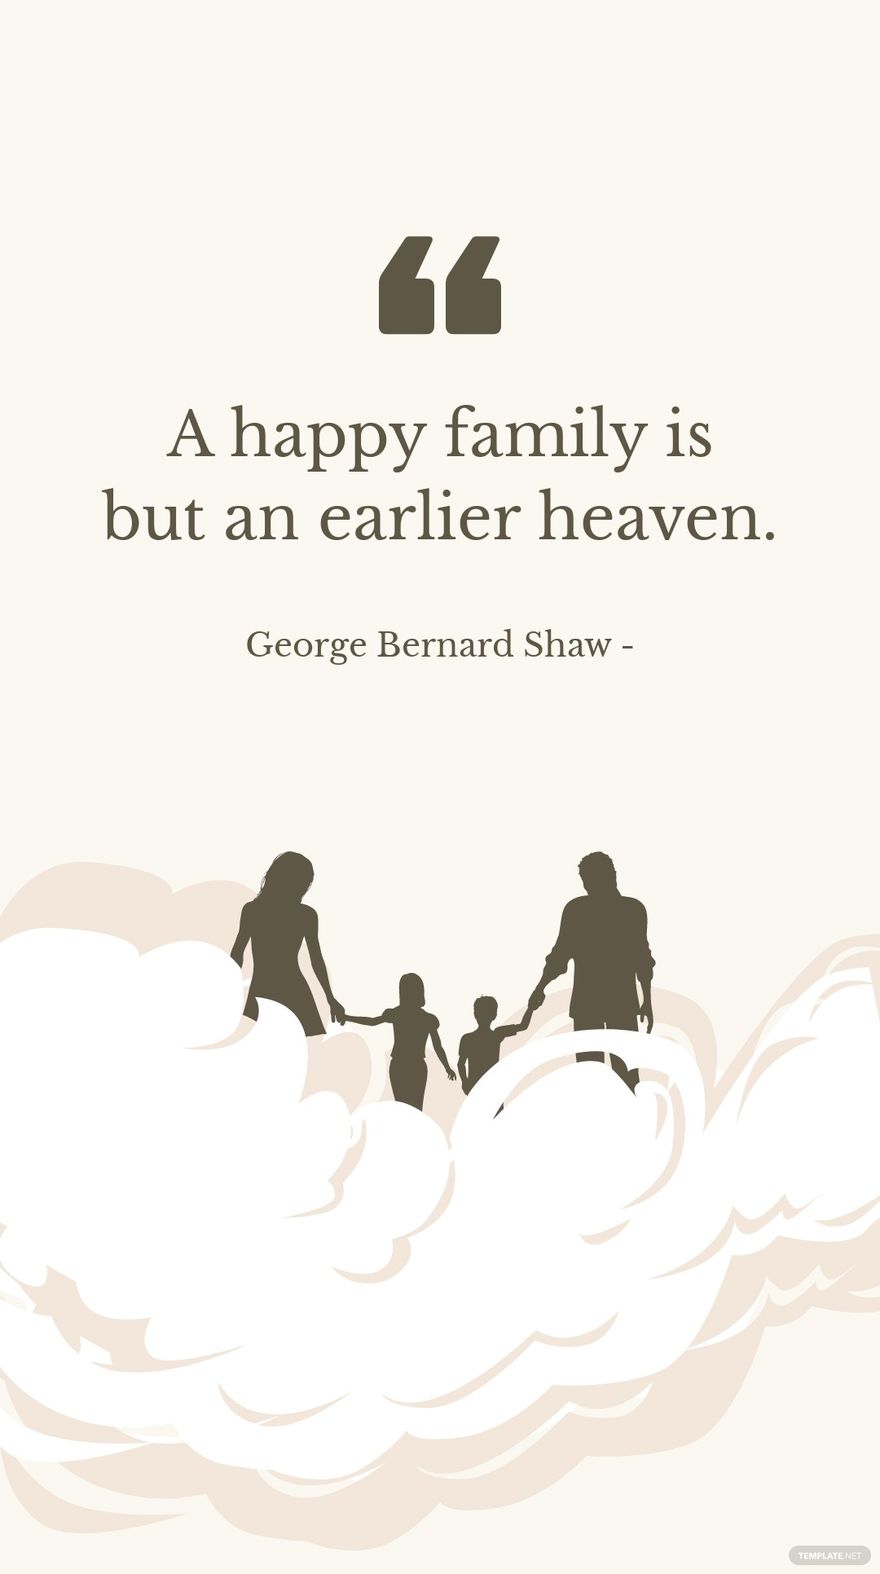 Free George Bernard Shaw - A happy family is but an earlier heaven.